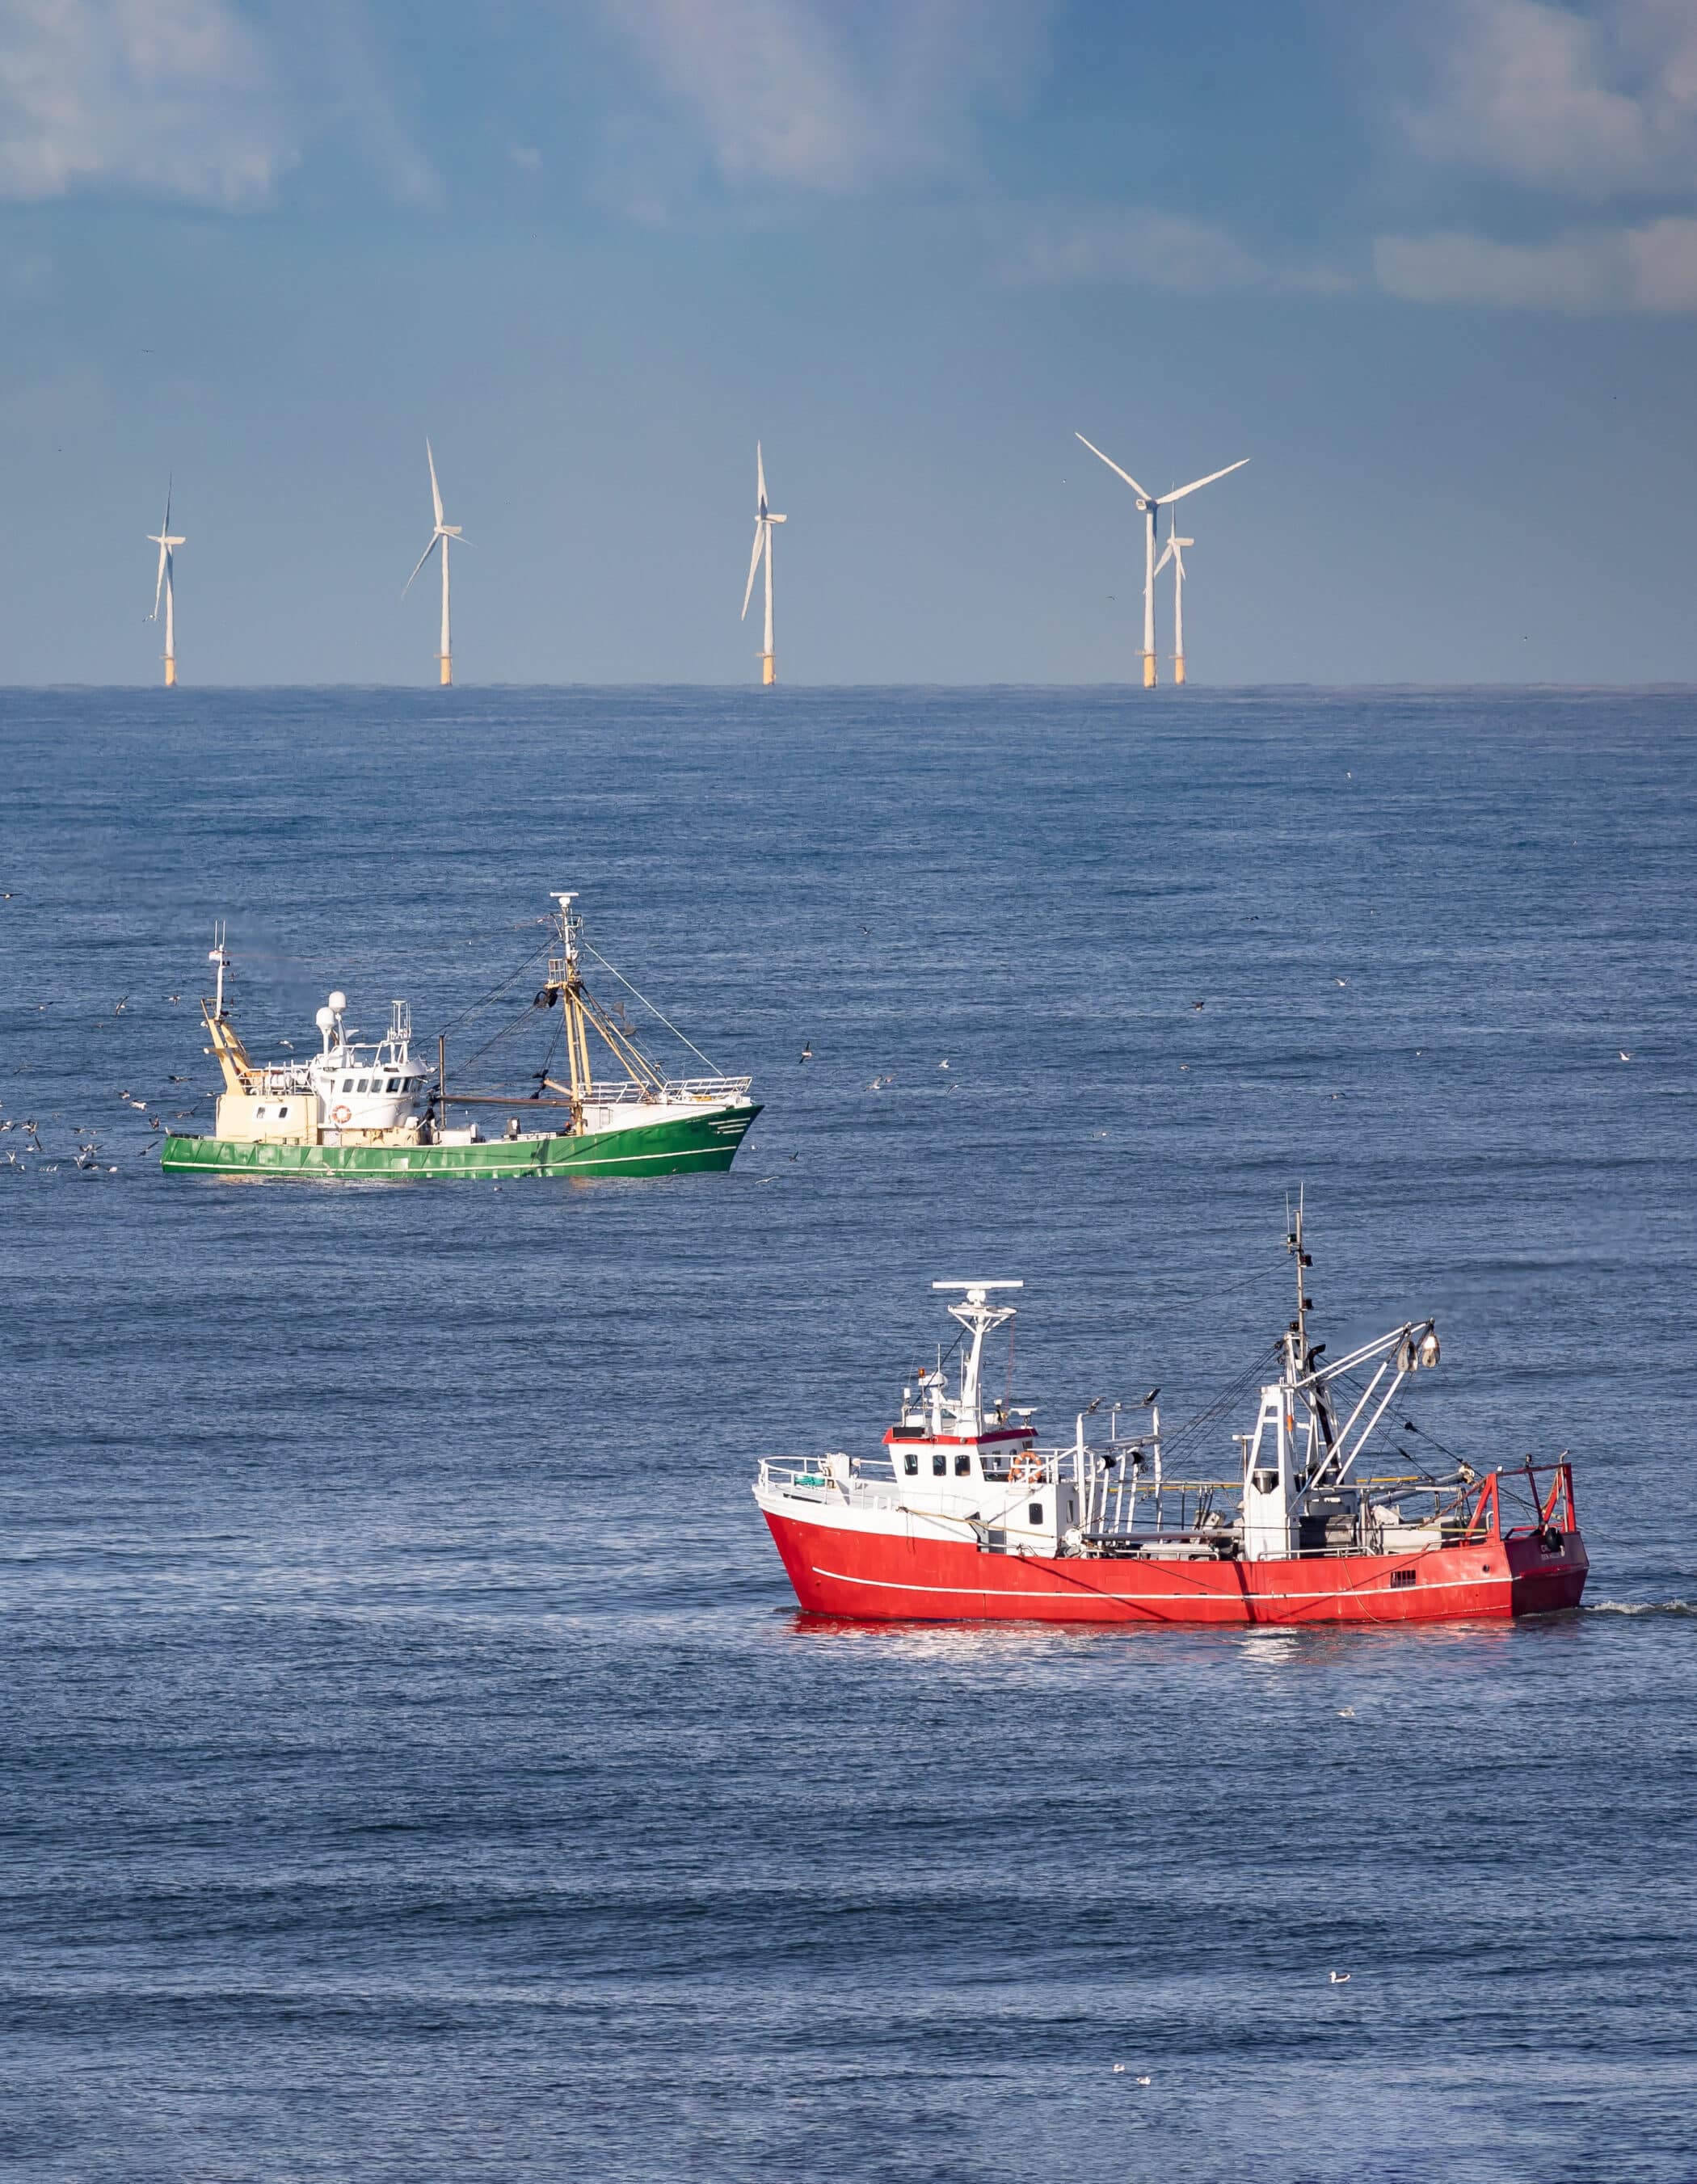 North Seas boat & Offshore wind turbines